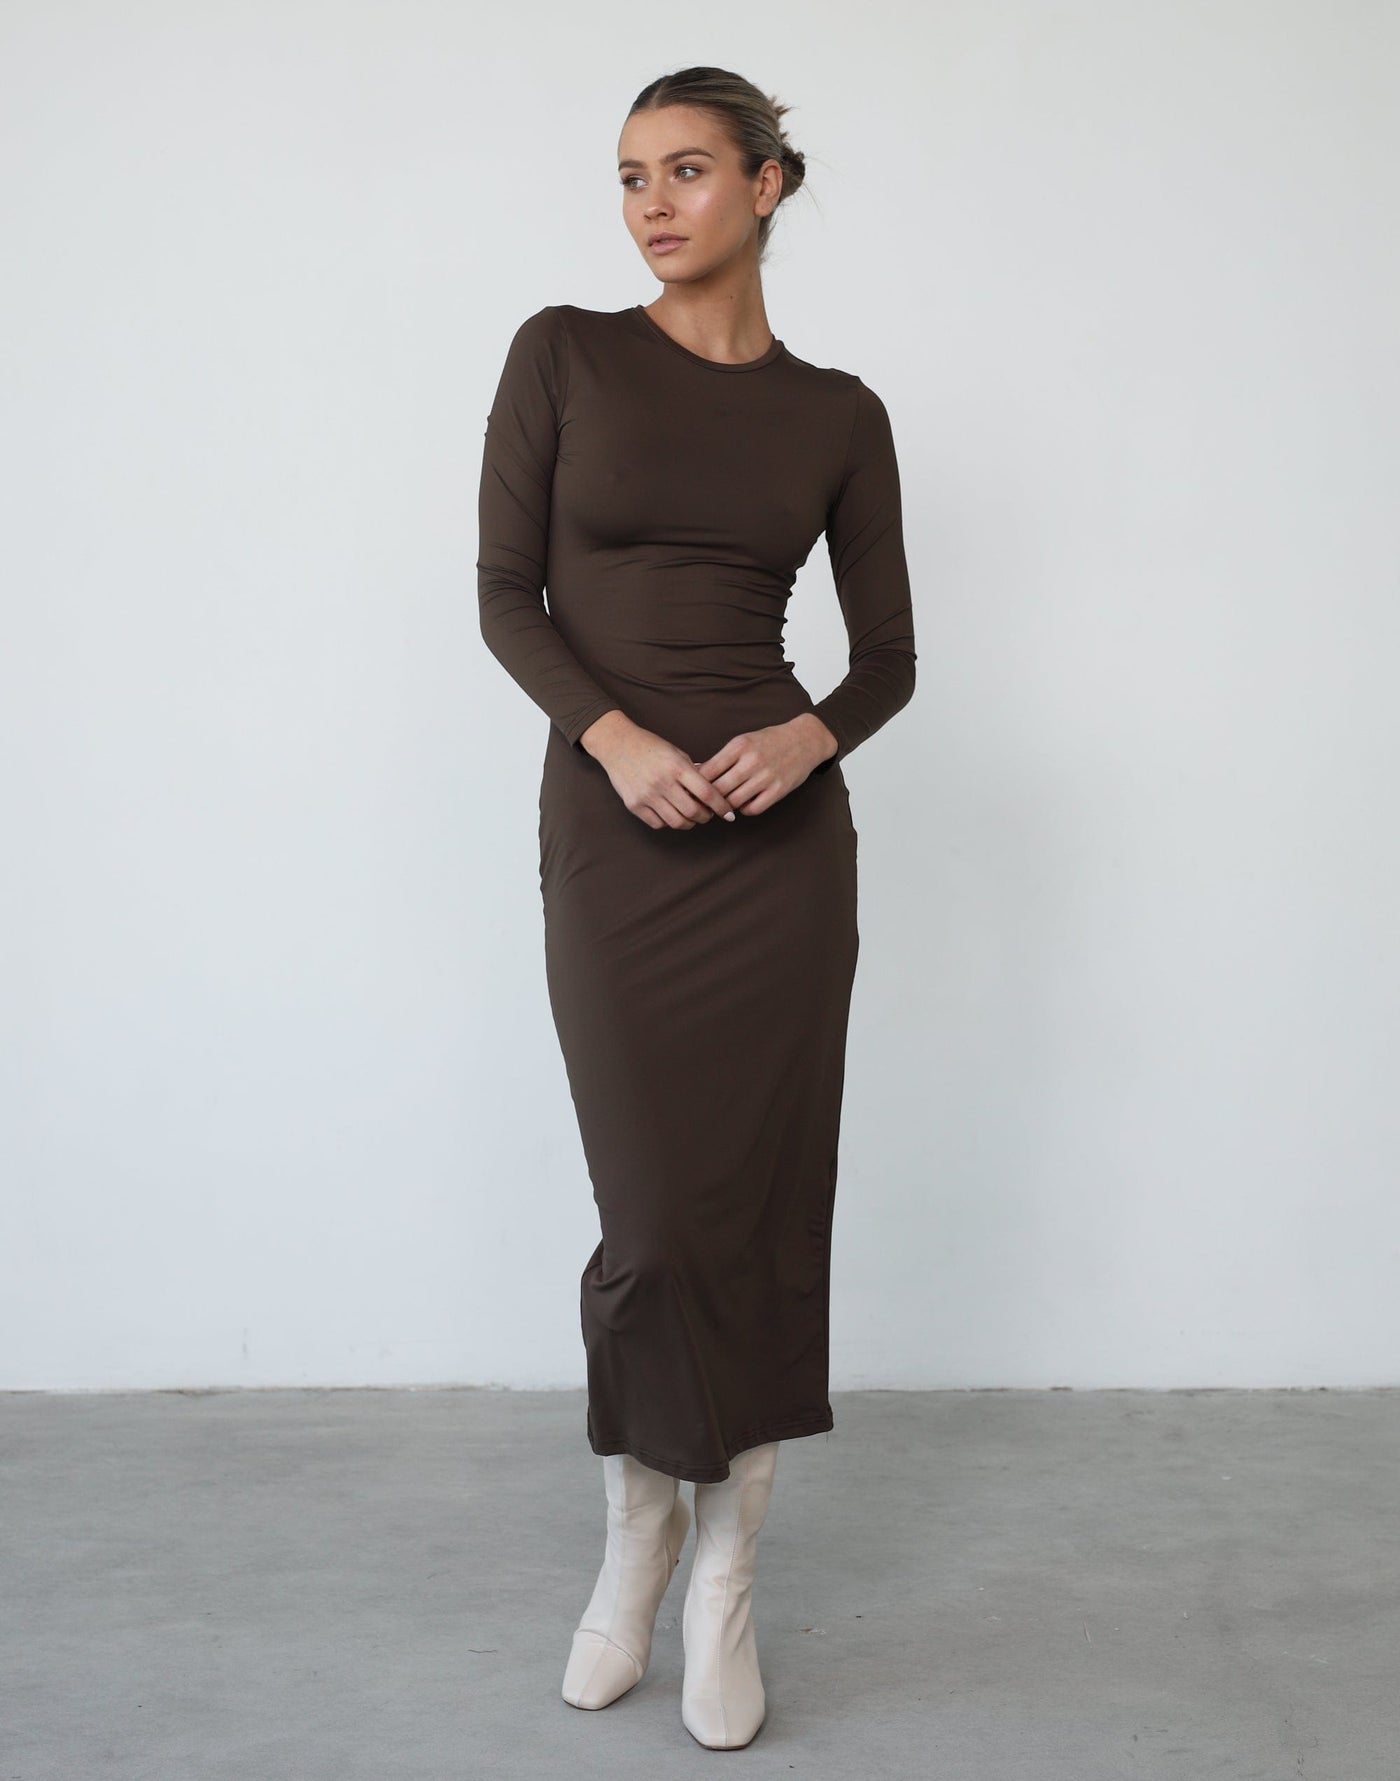 Shontae Long Sleeve Maxi Dress (Dark Olive) - Bodycon Maxi Dress - Women's Dress - Charcoal Clothing